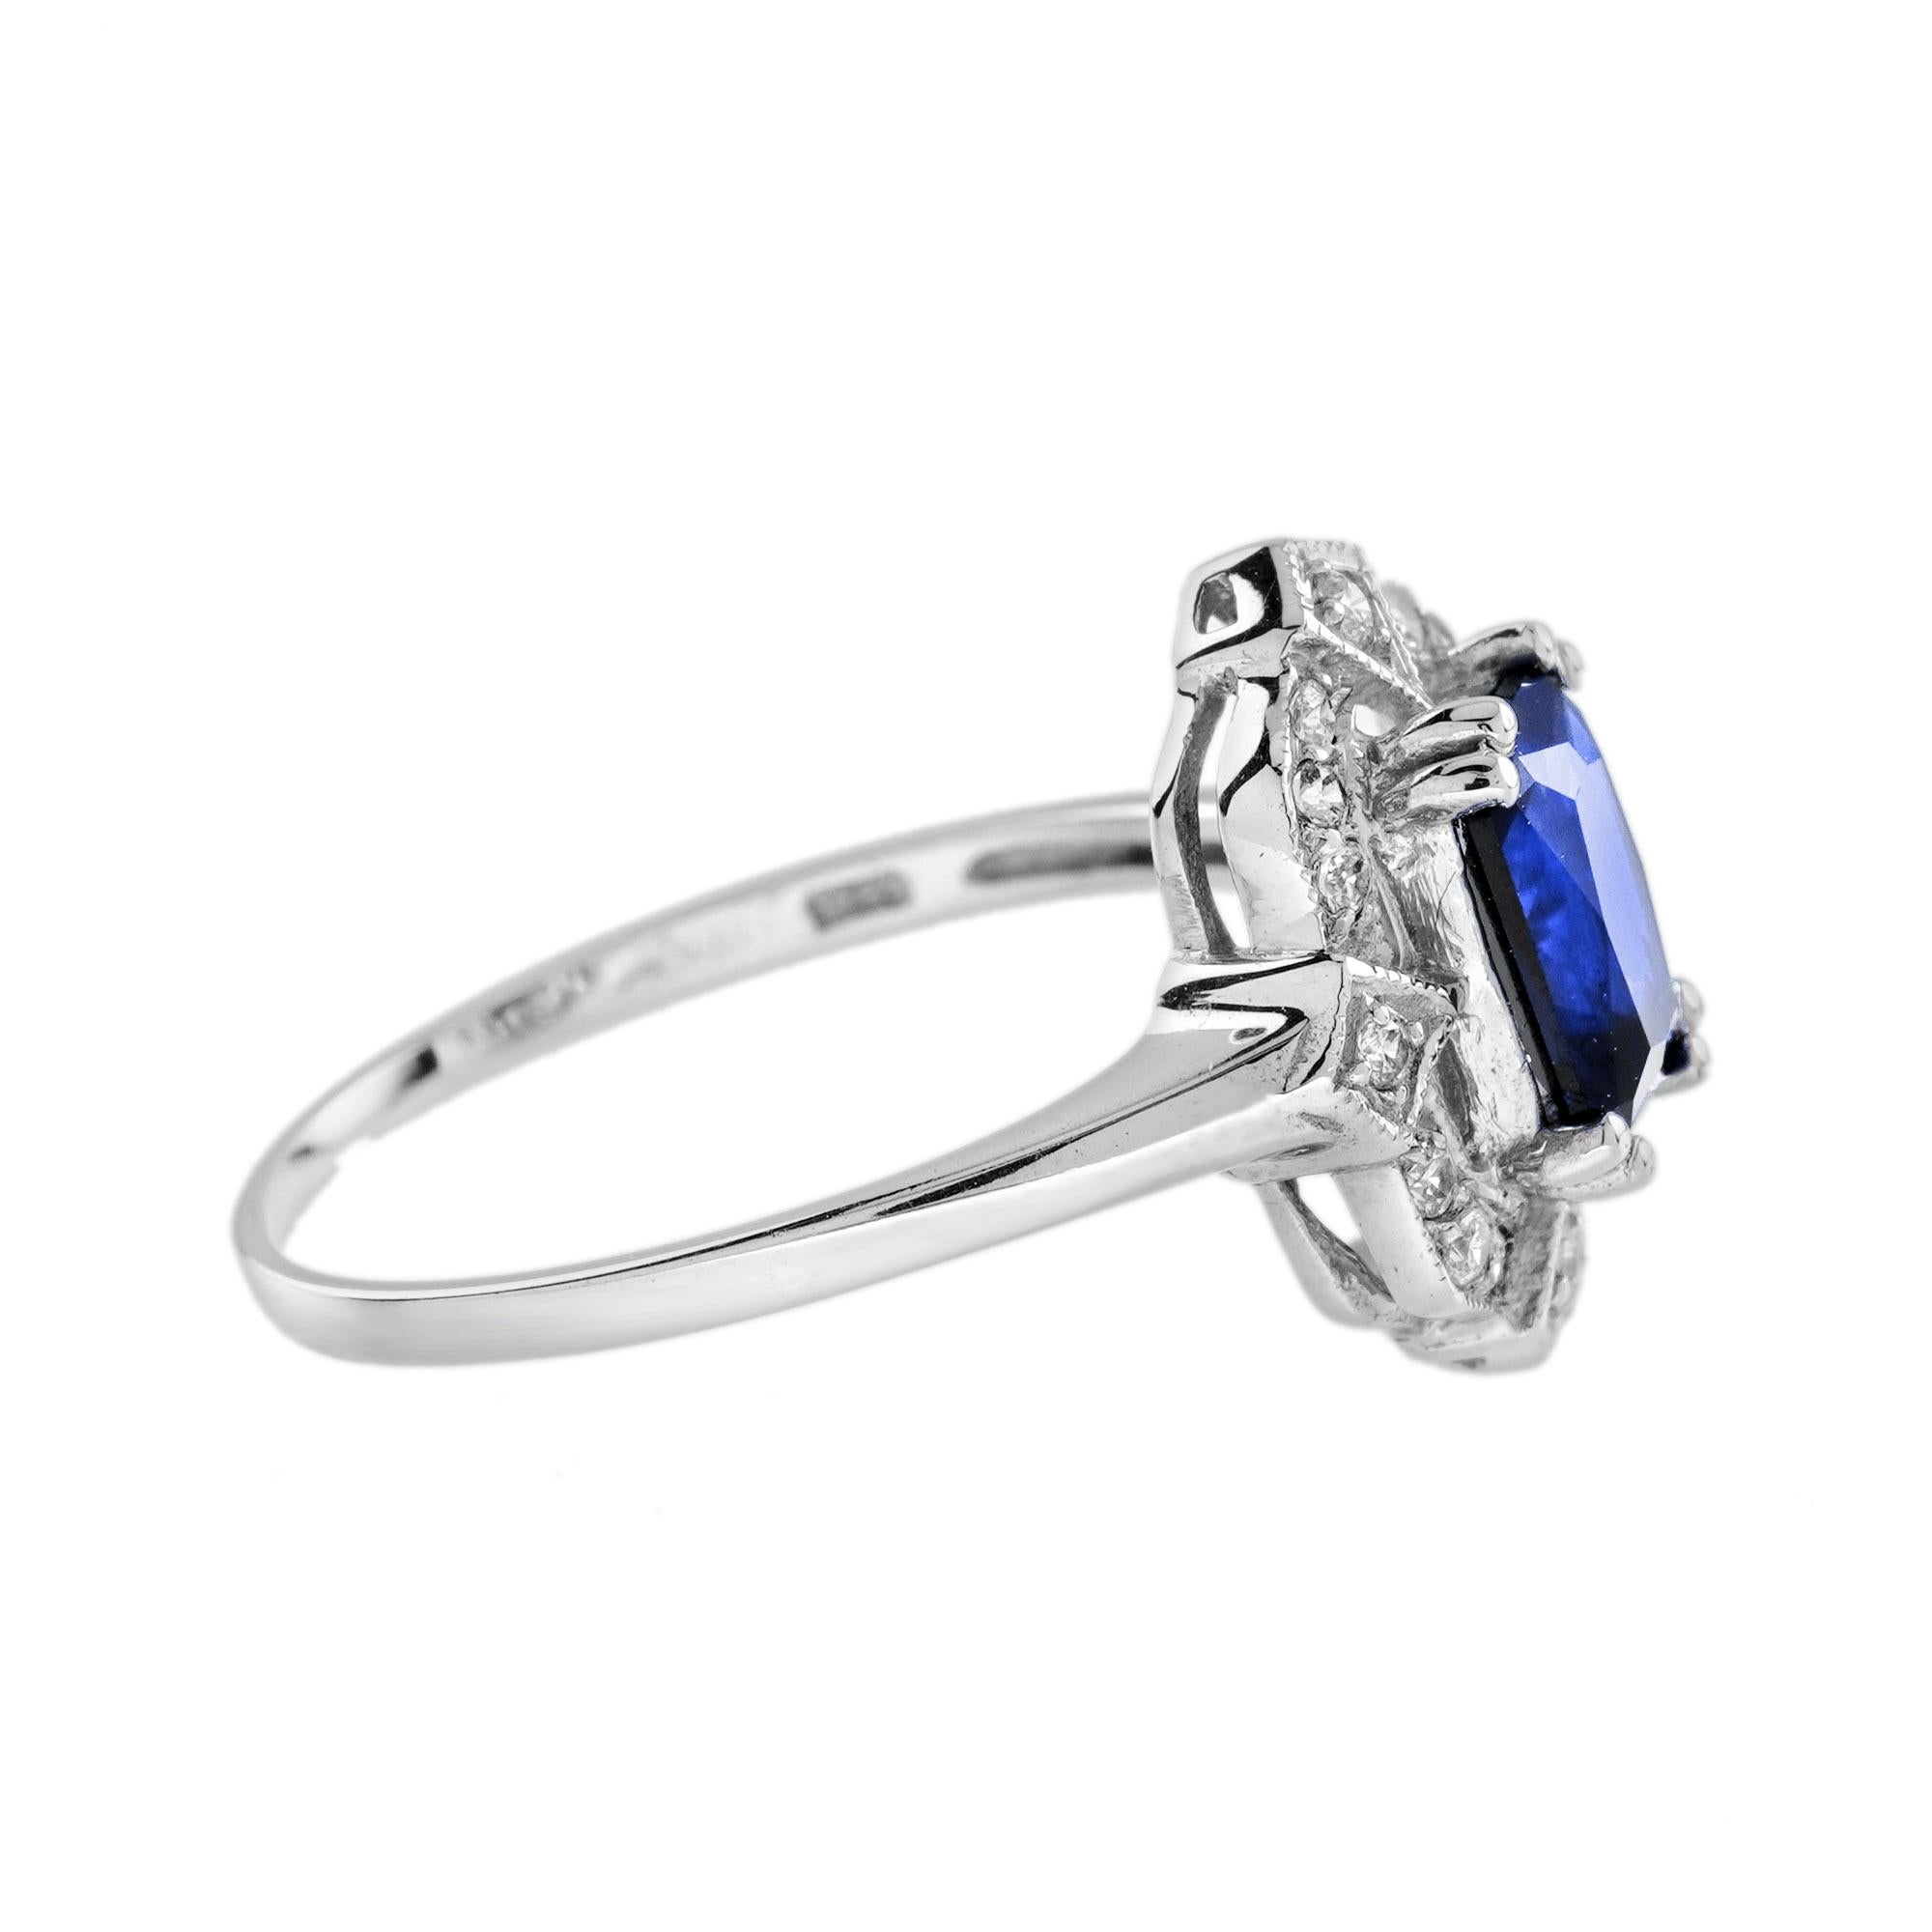 For Sale:  Emerald Cut Ceylon Sapphire and Diamond Halo Ring in 18K White Gold 4